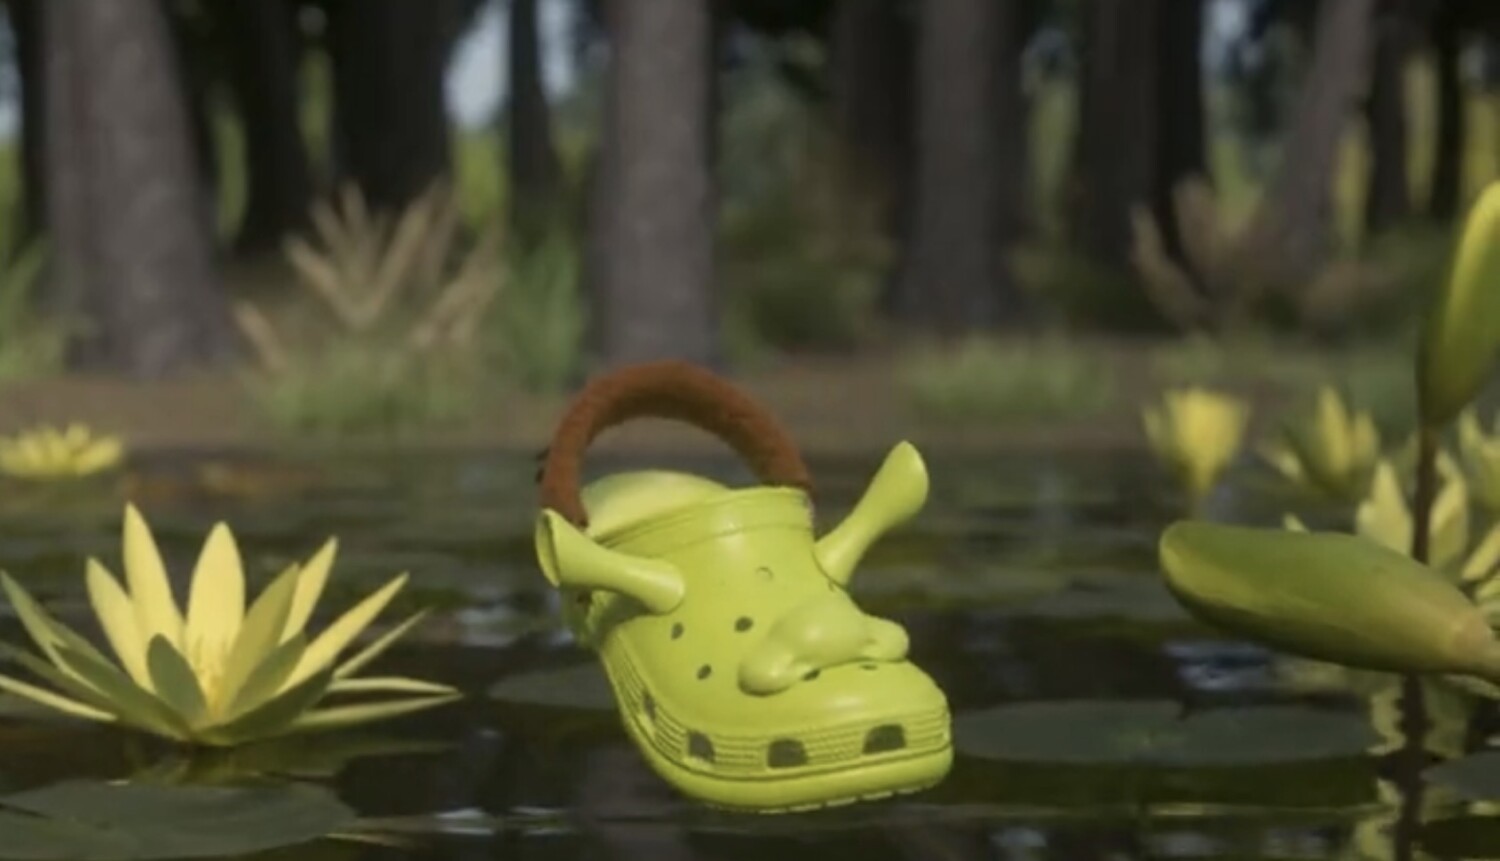 Where to buy the new Crocs Classic DreamWorks Shrek Clog - Reviewed